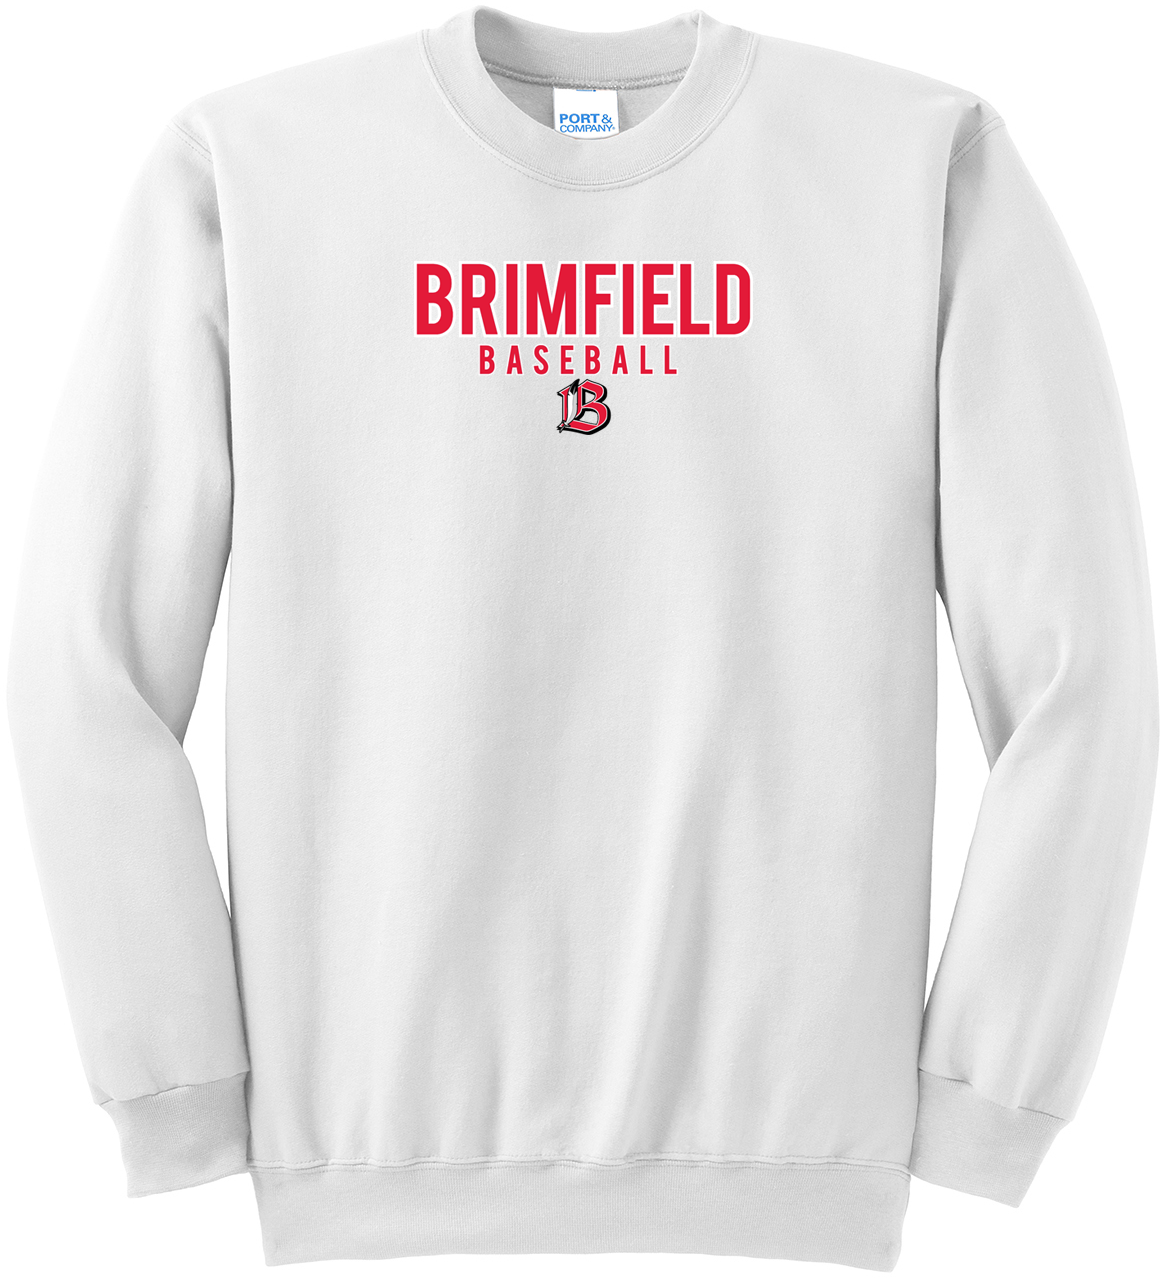 Brimfield Baseball Crew Neck Sweater